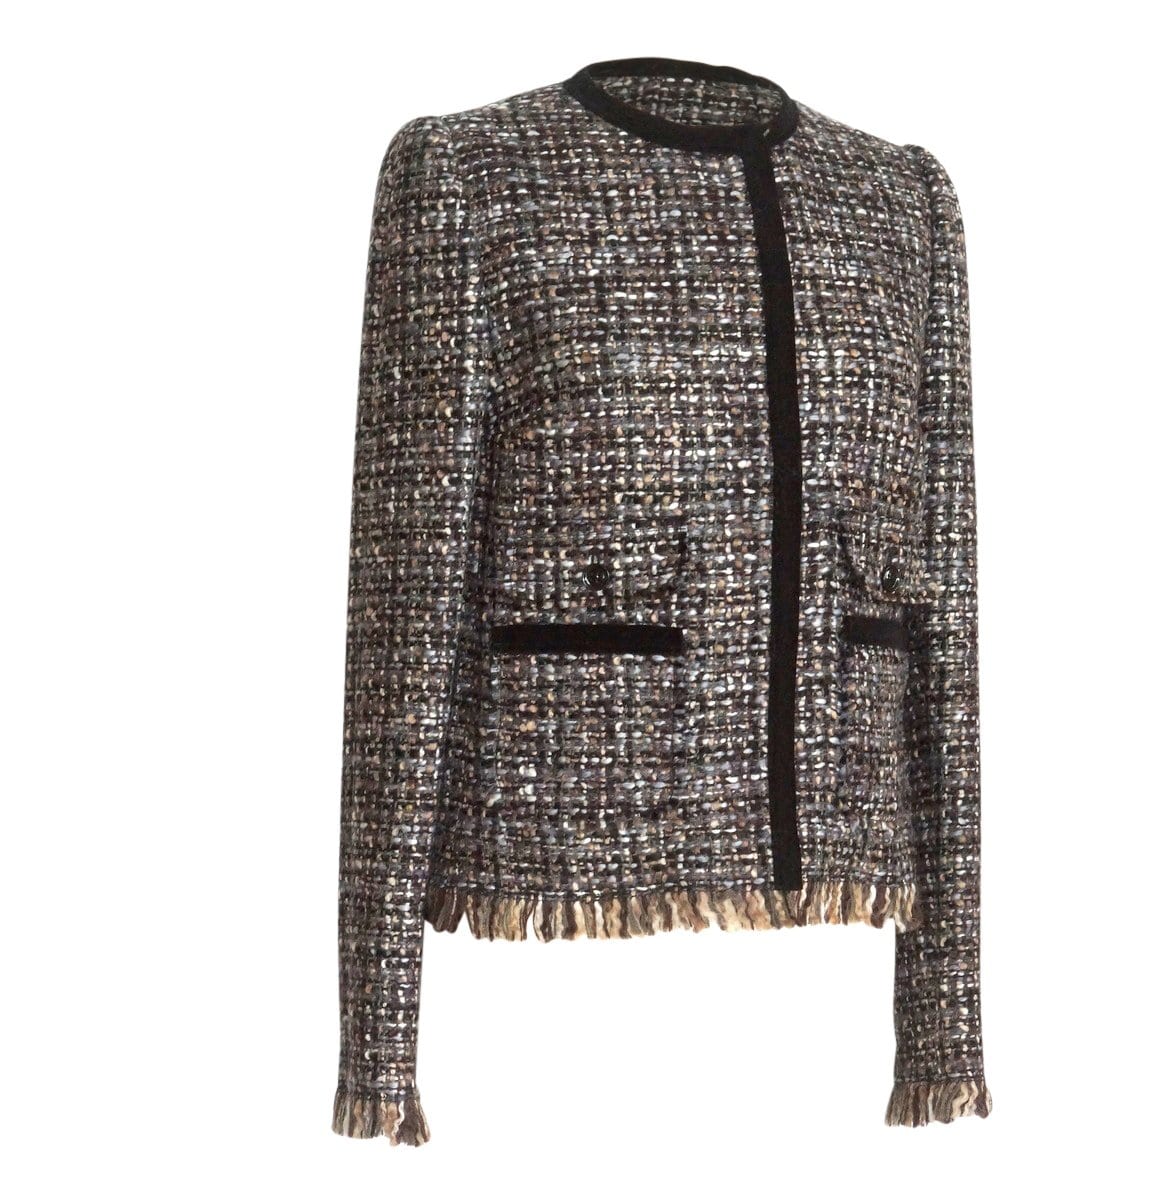 Dolce&Gabbana Jacket Luxurious Fantasy Tweed Velvet Details 44 / 10 - mightychic